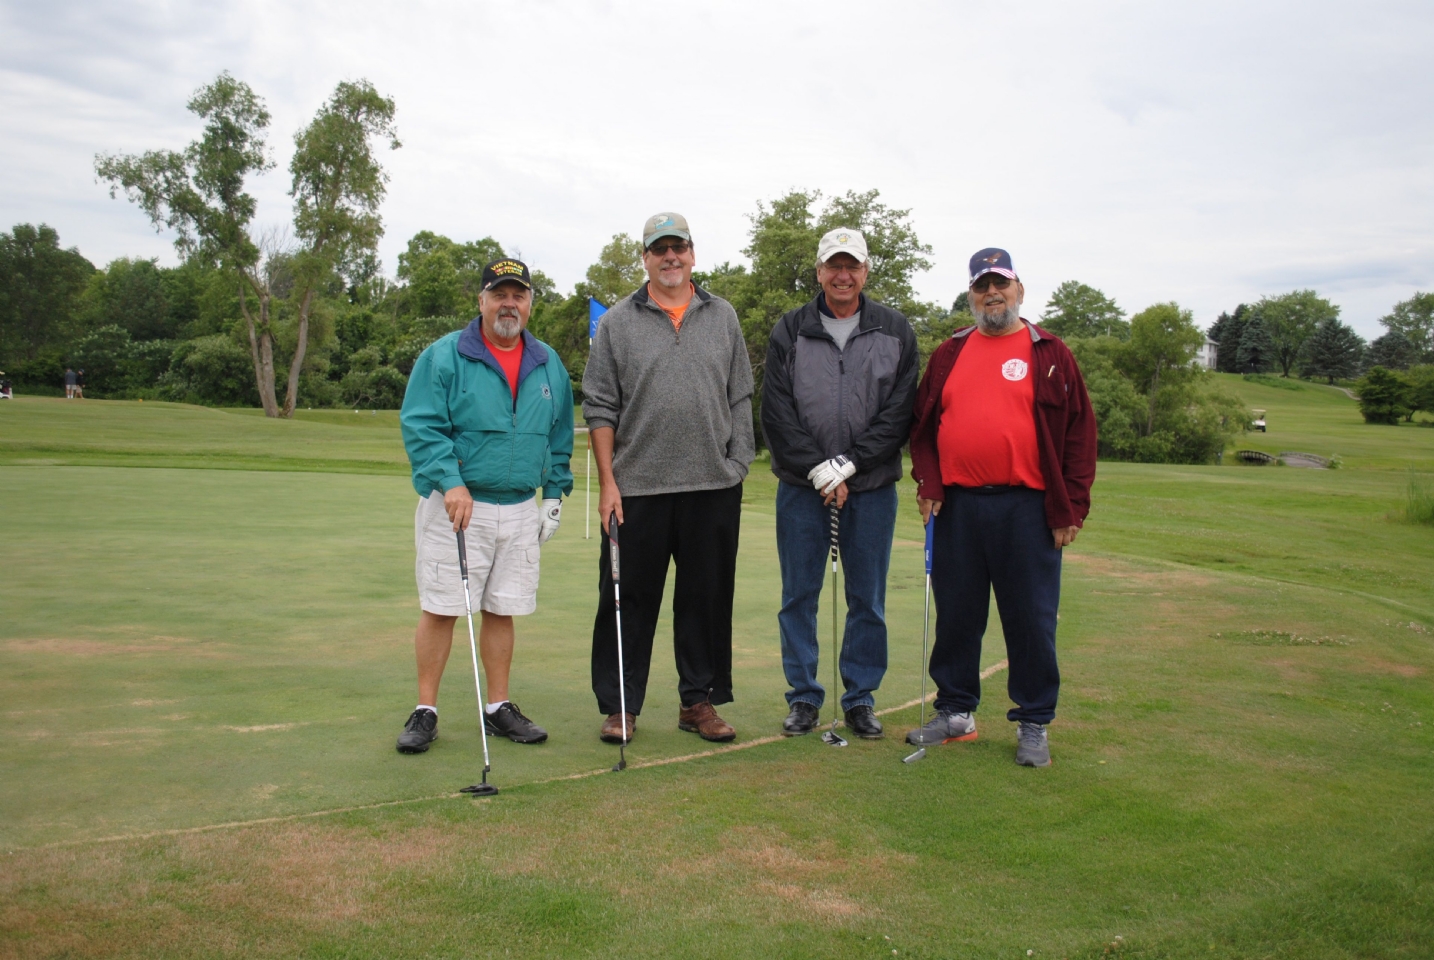 Village Green Golf Course, Newaygo, MI

John Griffith
Mike Keller
Diane
Mark
